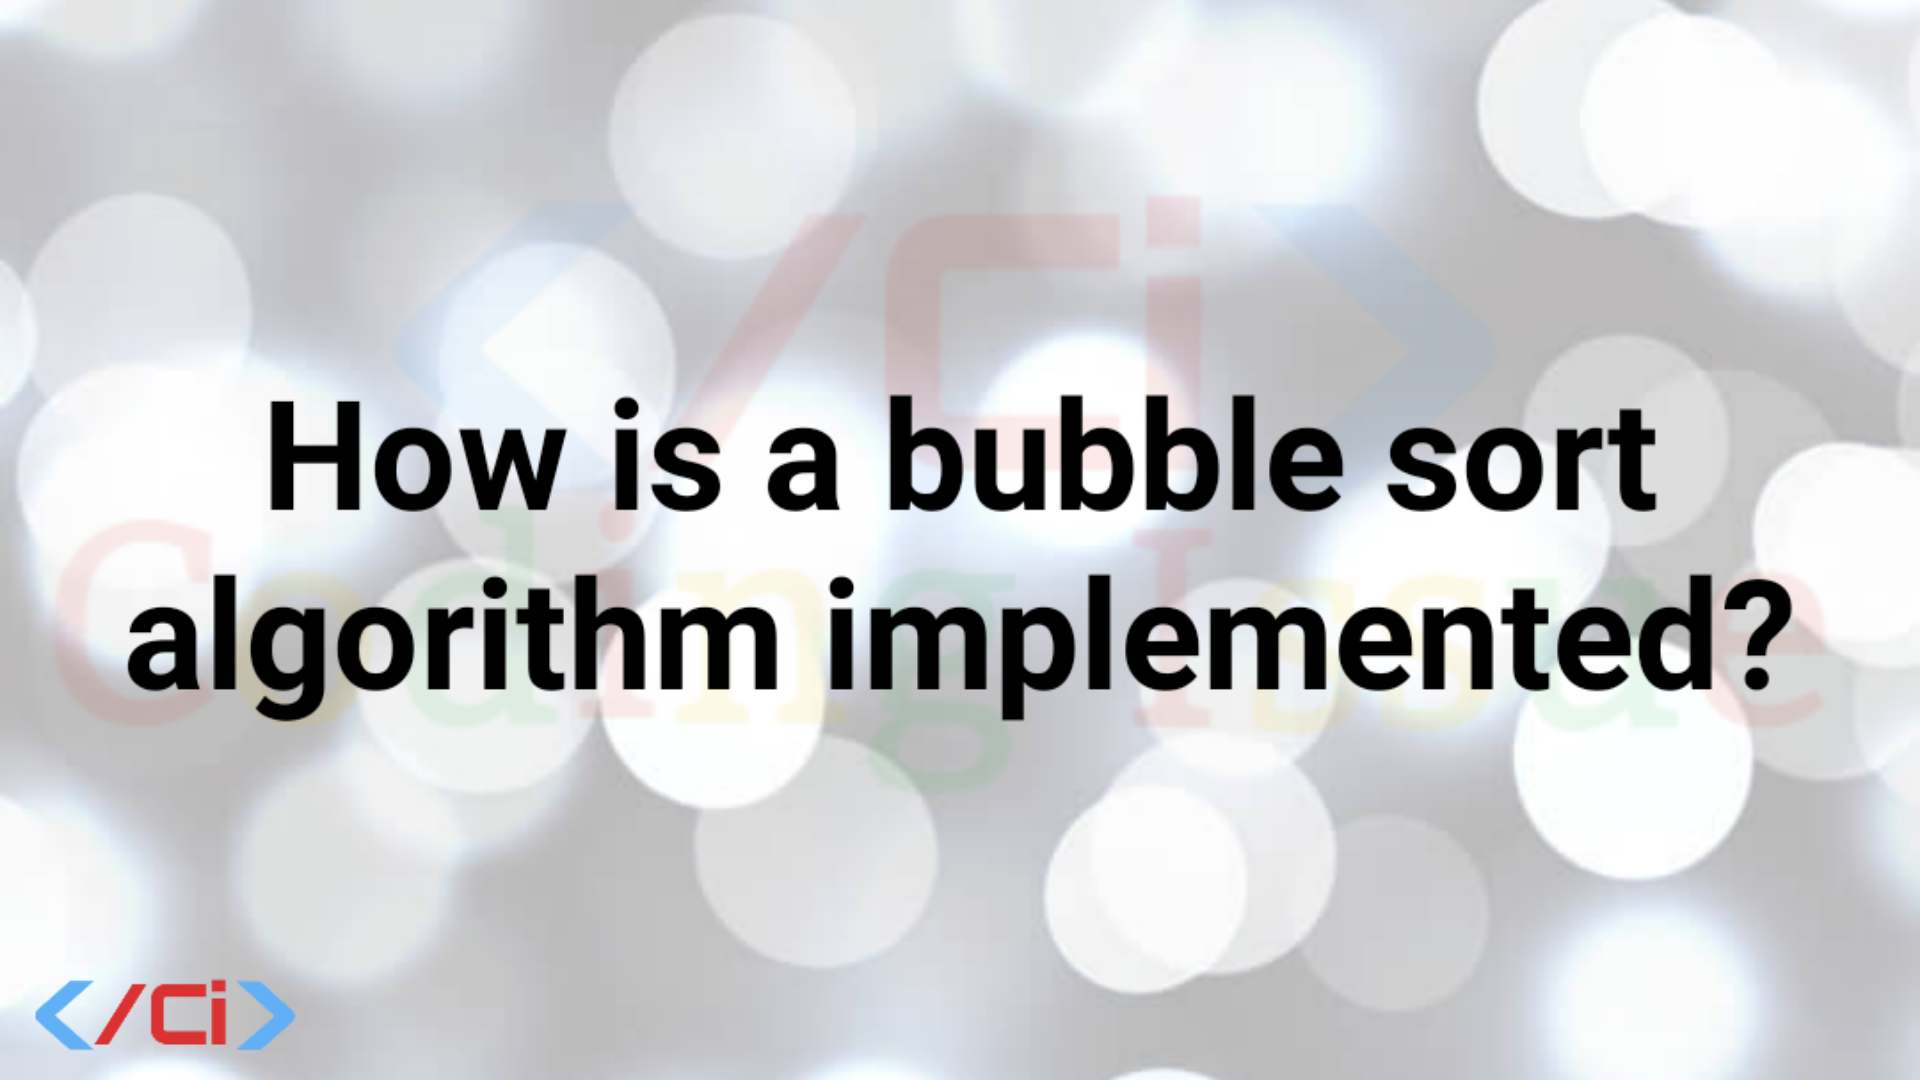 How is a bubble sort algorithm implemented?